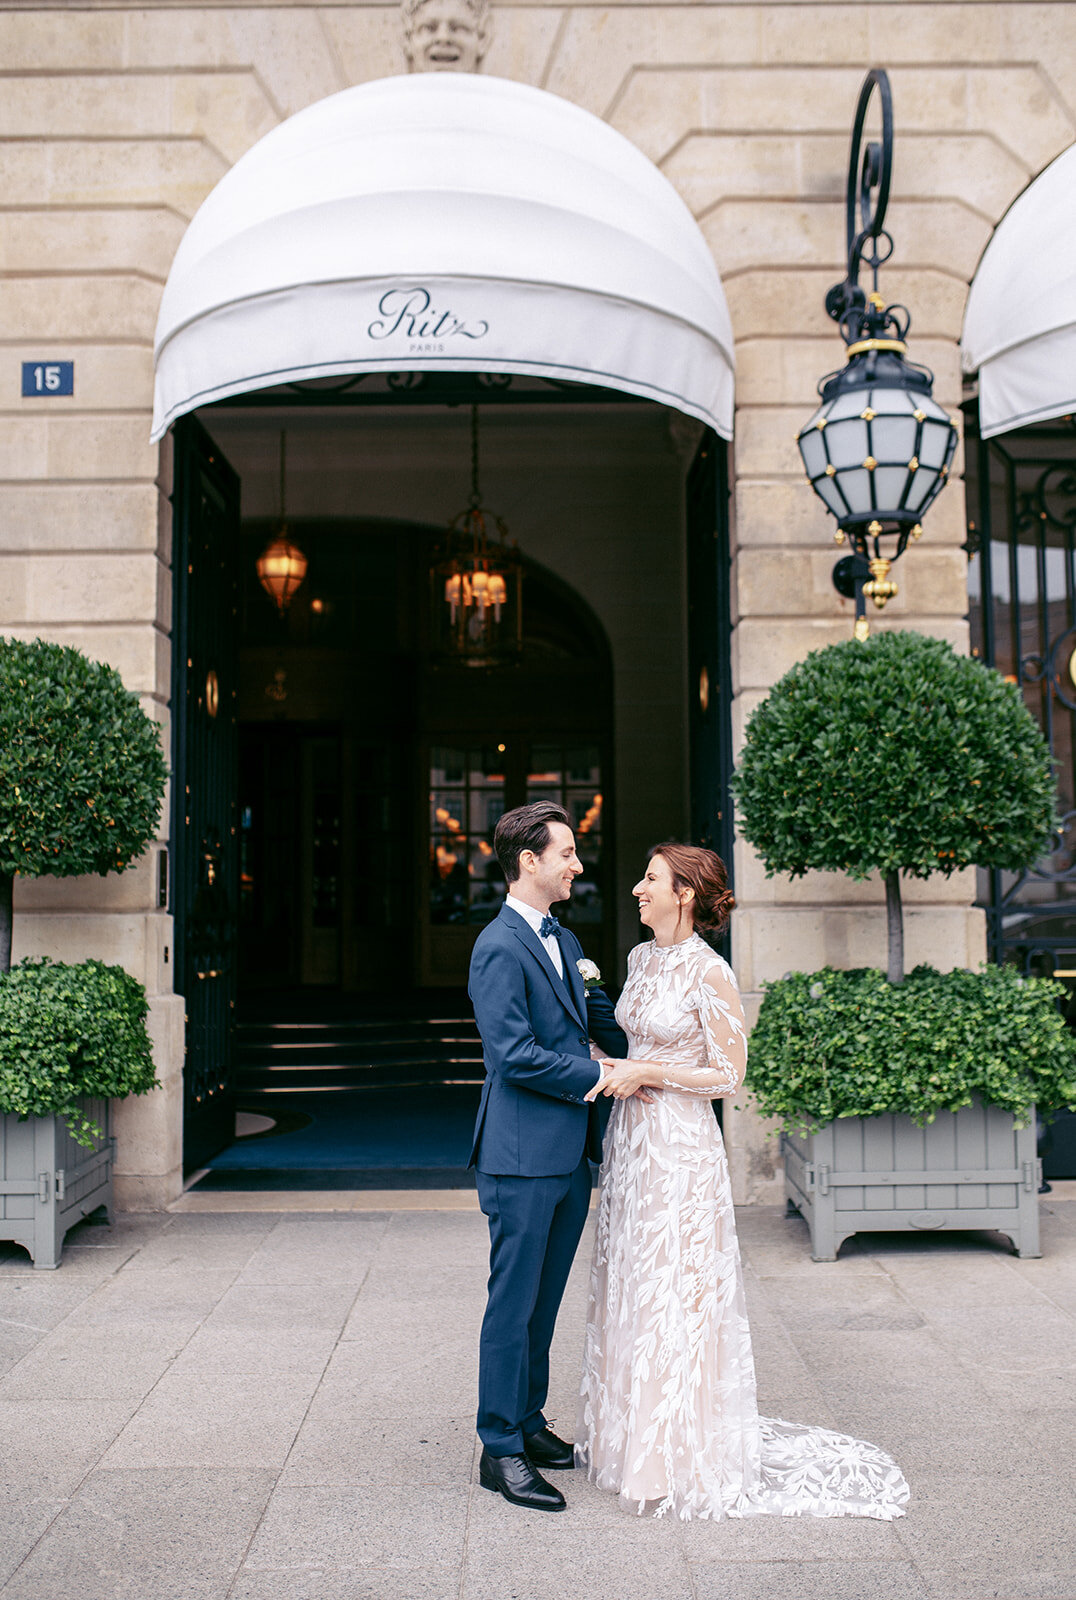 Luxury wedding photographer at Ritz Paris